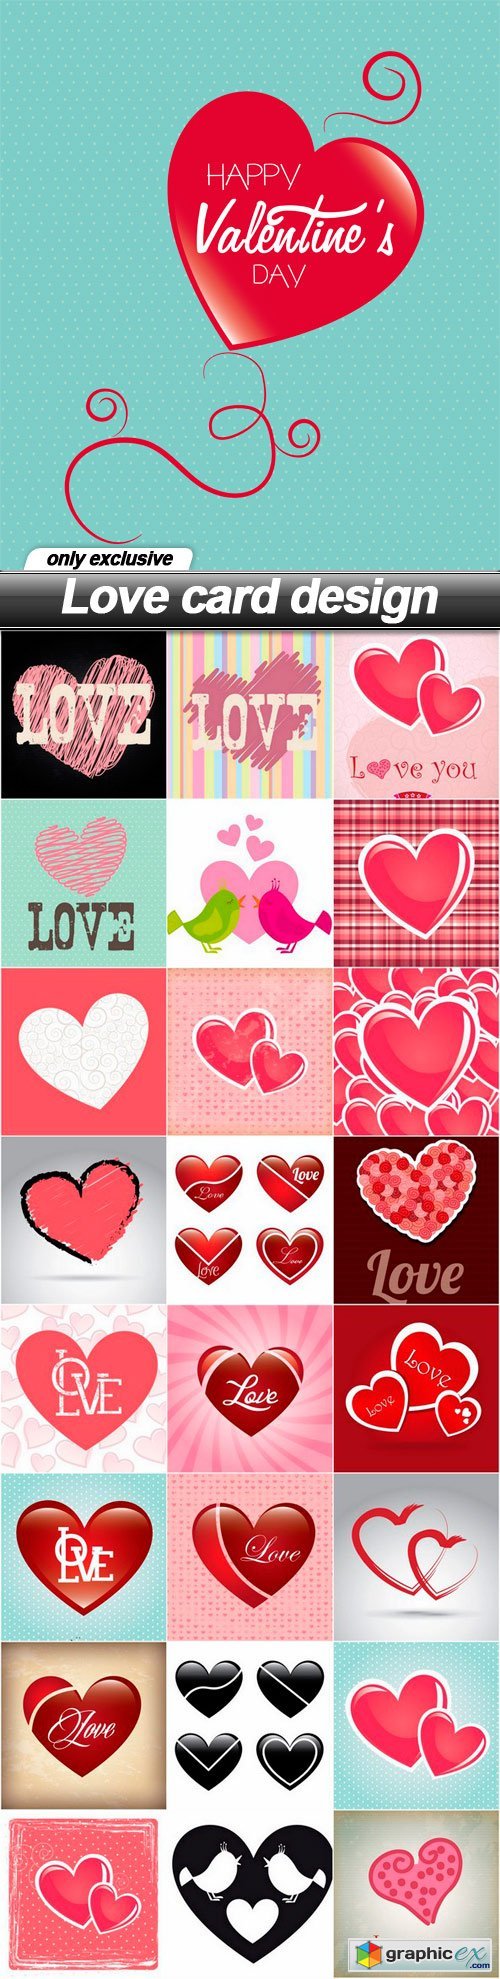 Love card design - 25 EPS